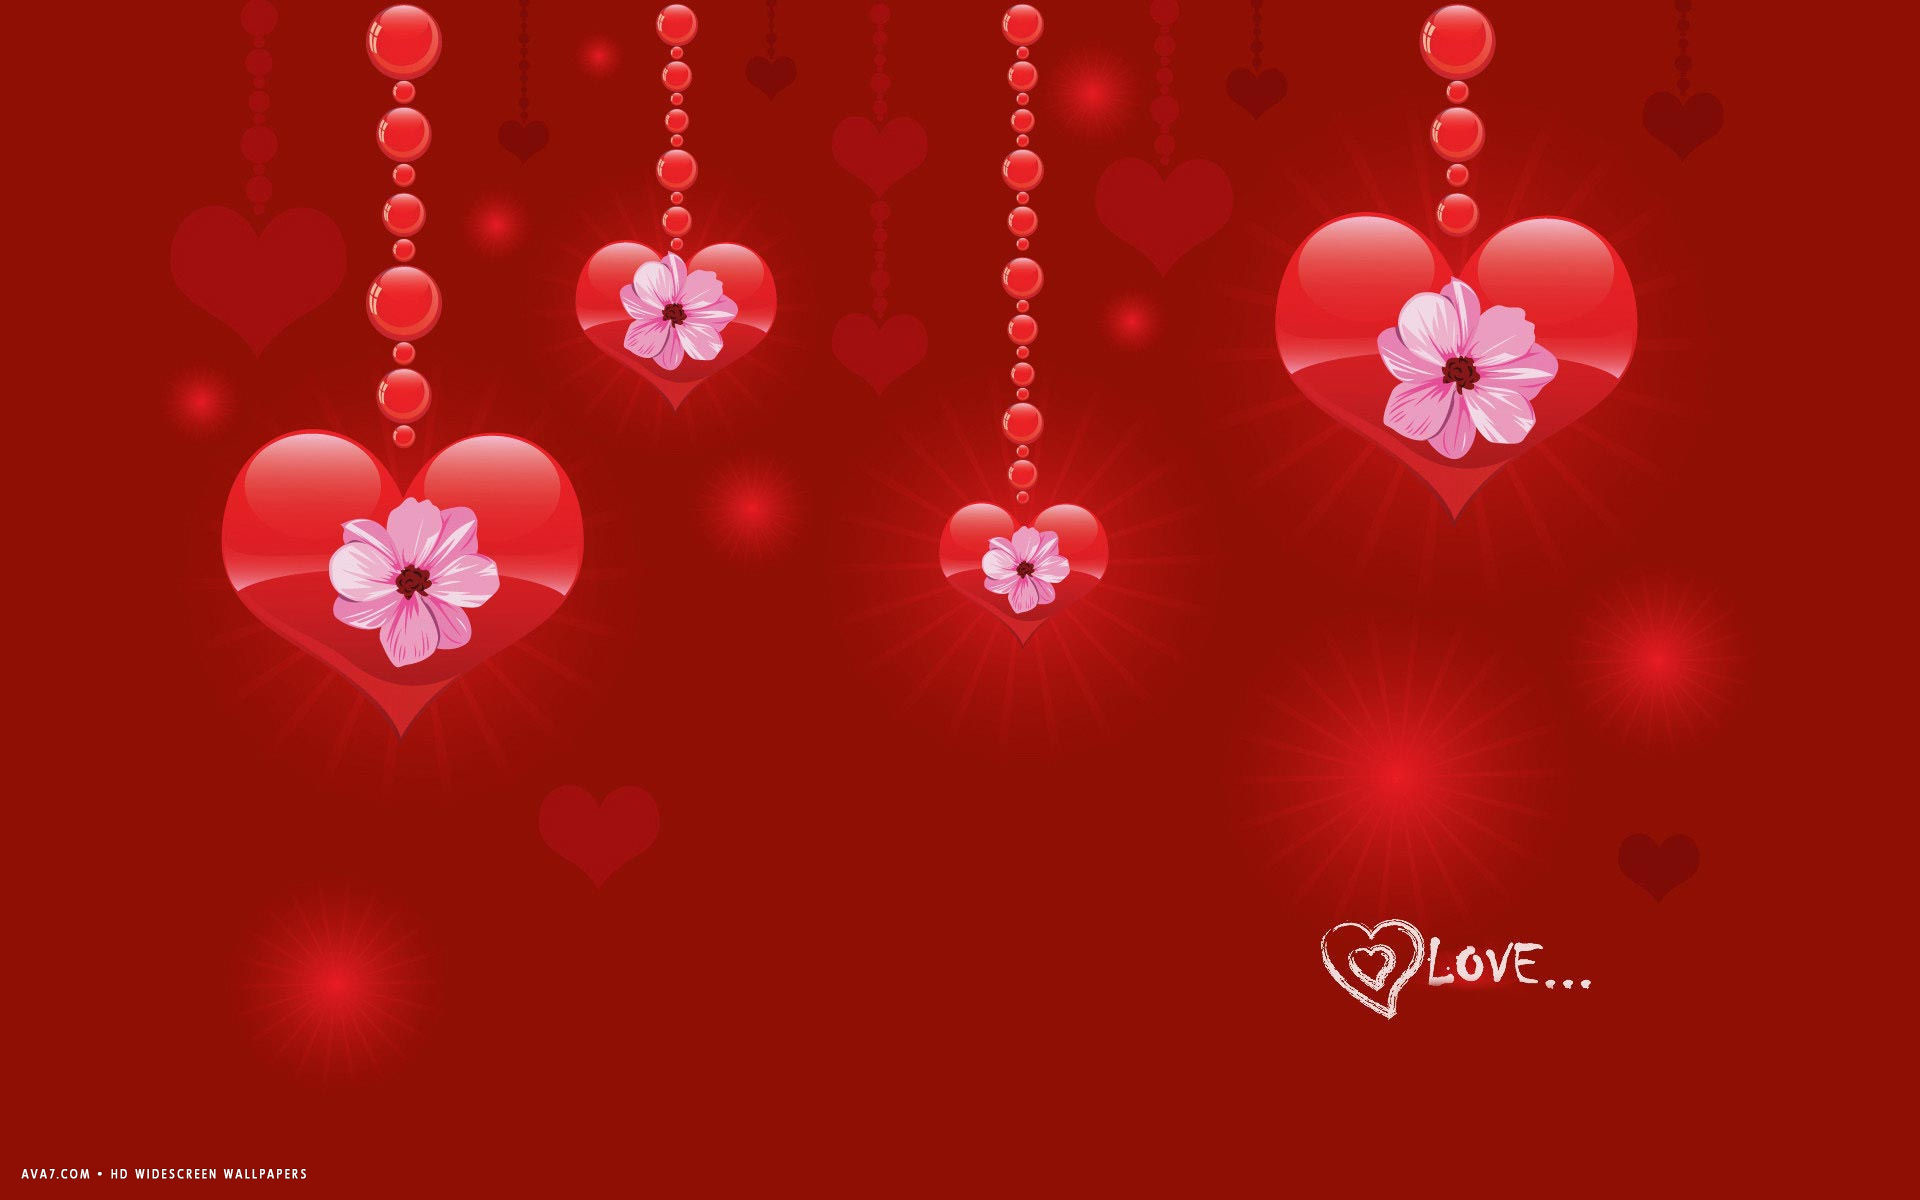 1920x1200 love word red hearts flowers hd widescreen wallpaper